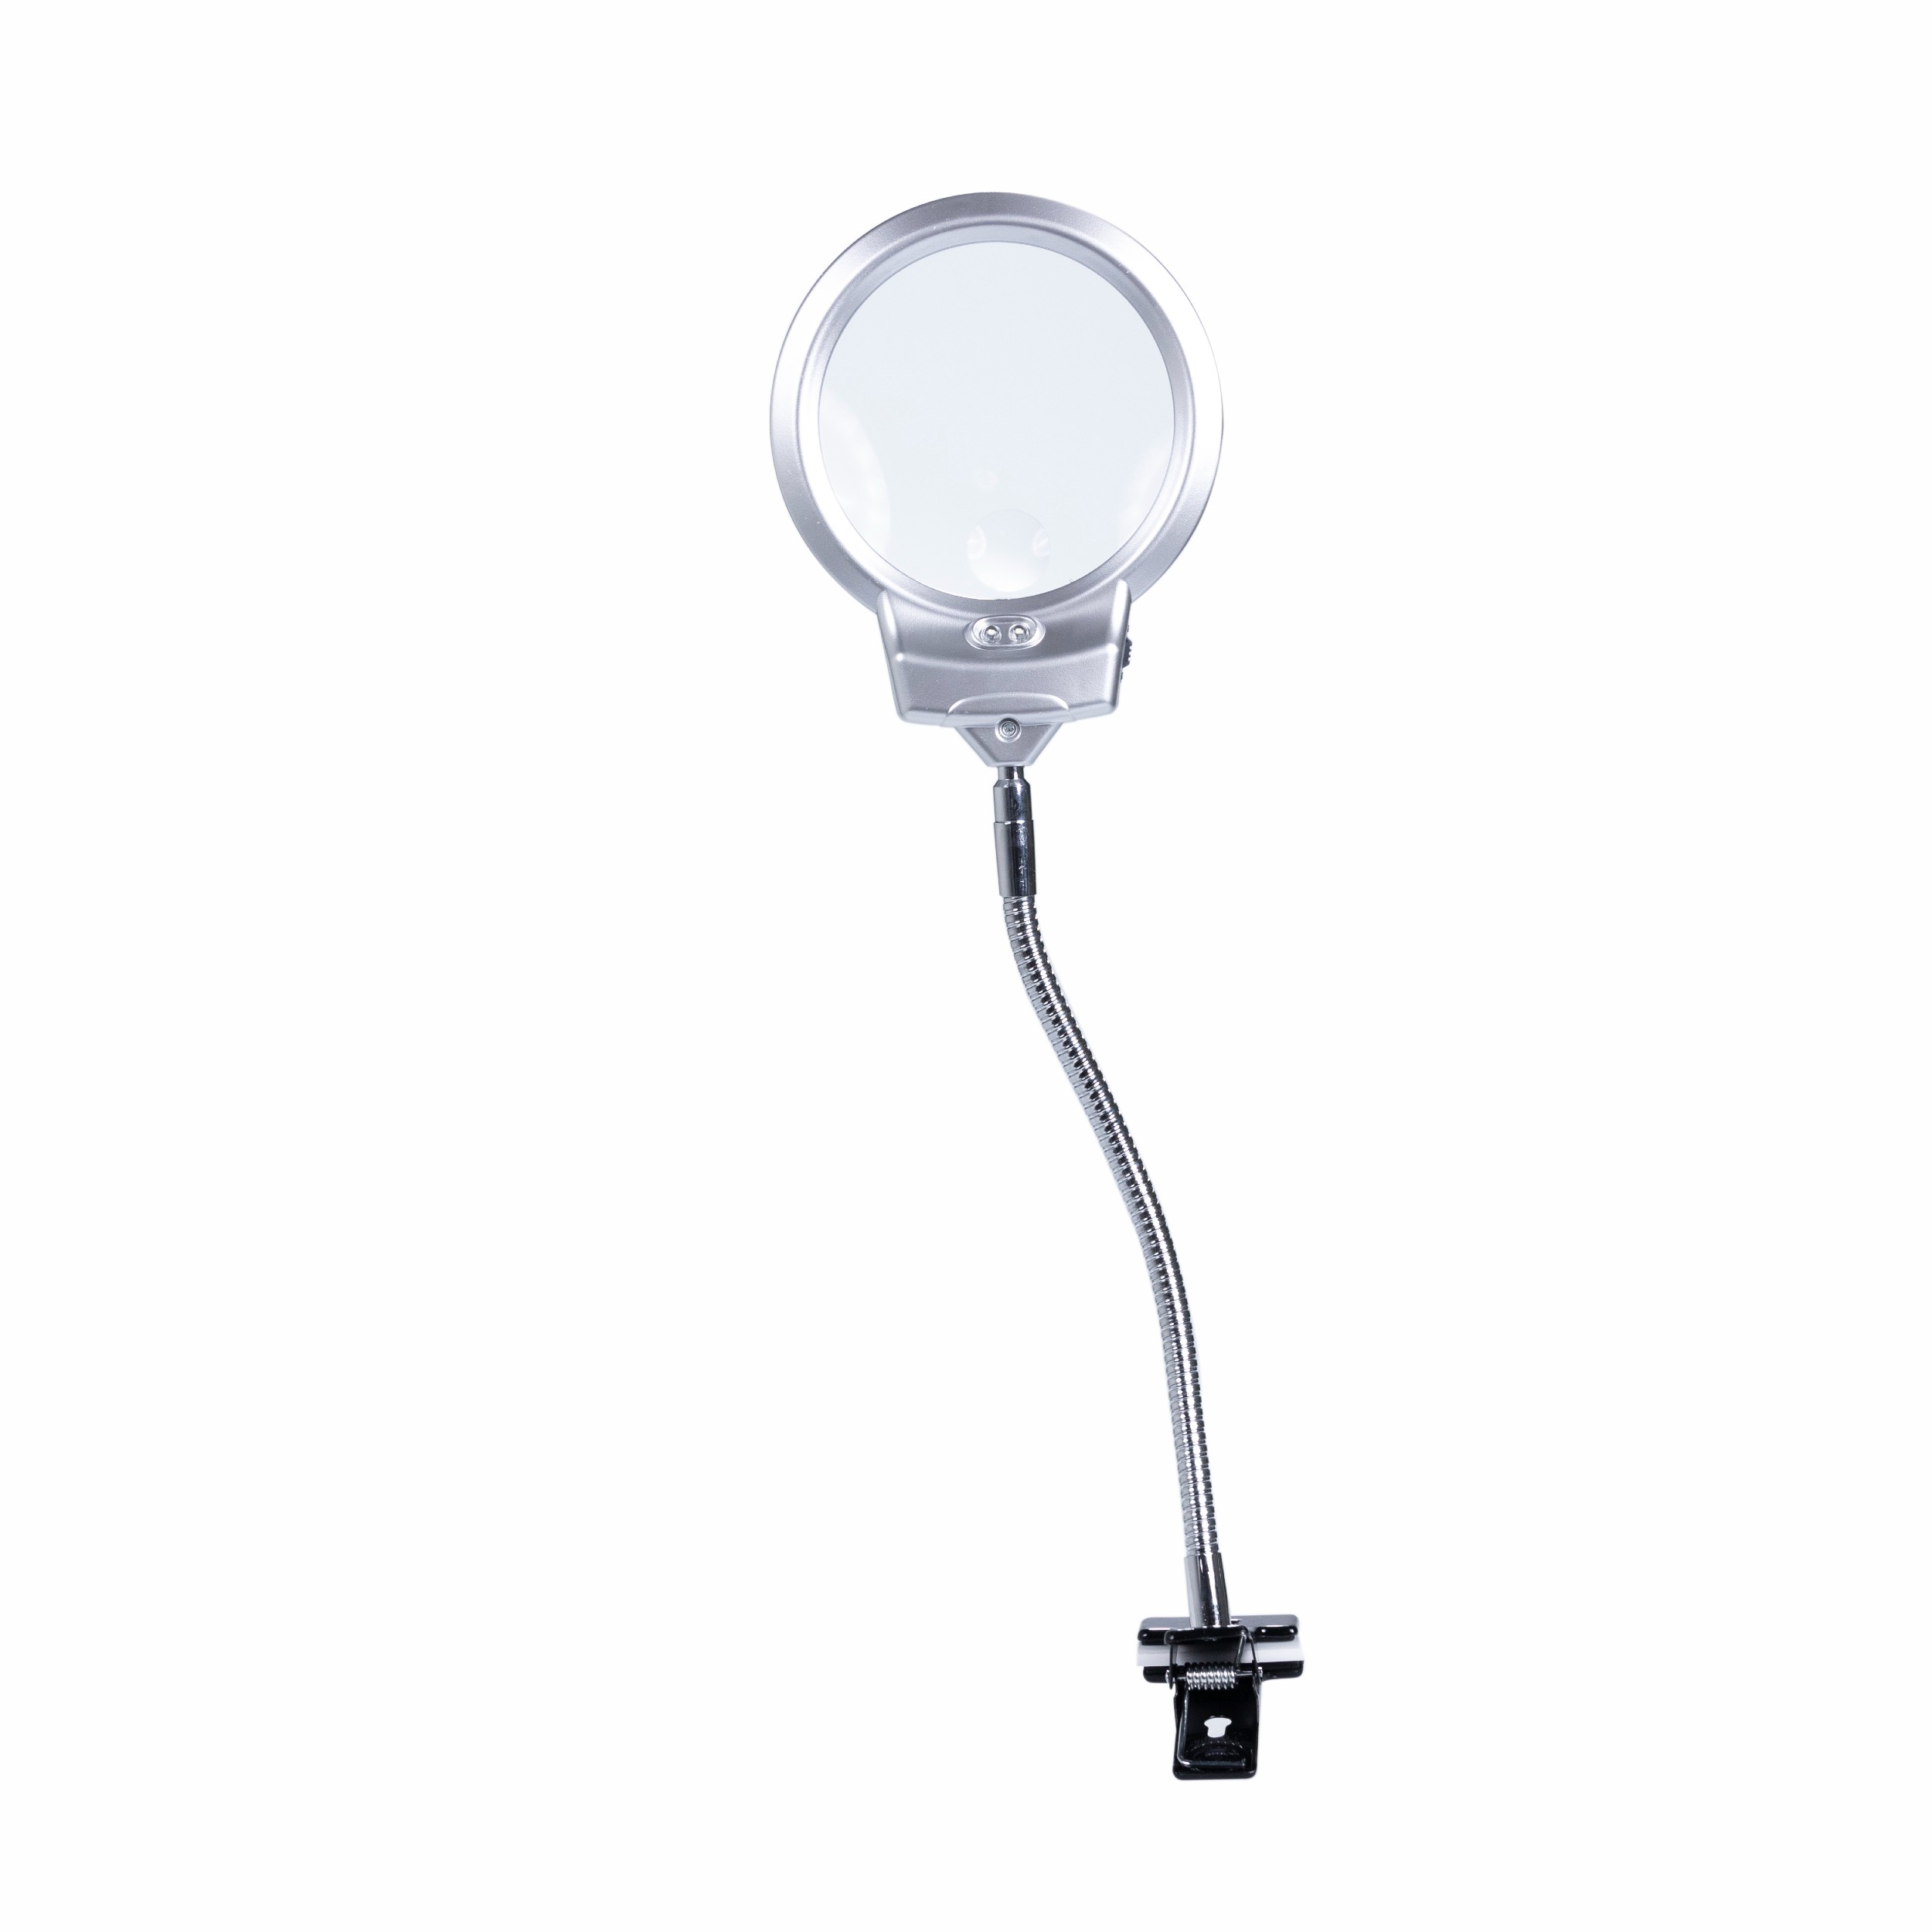 Crafts & Co. Magnifying Hobby Lamp - 2 vergrootglazen in 1 - Met tafelklem en draaibare hals - Inclusief LED-lamp